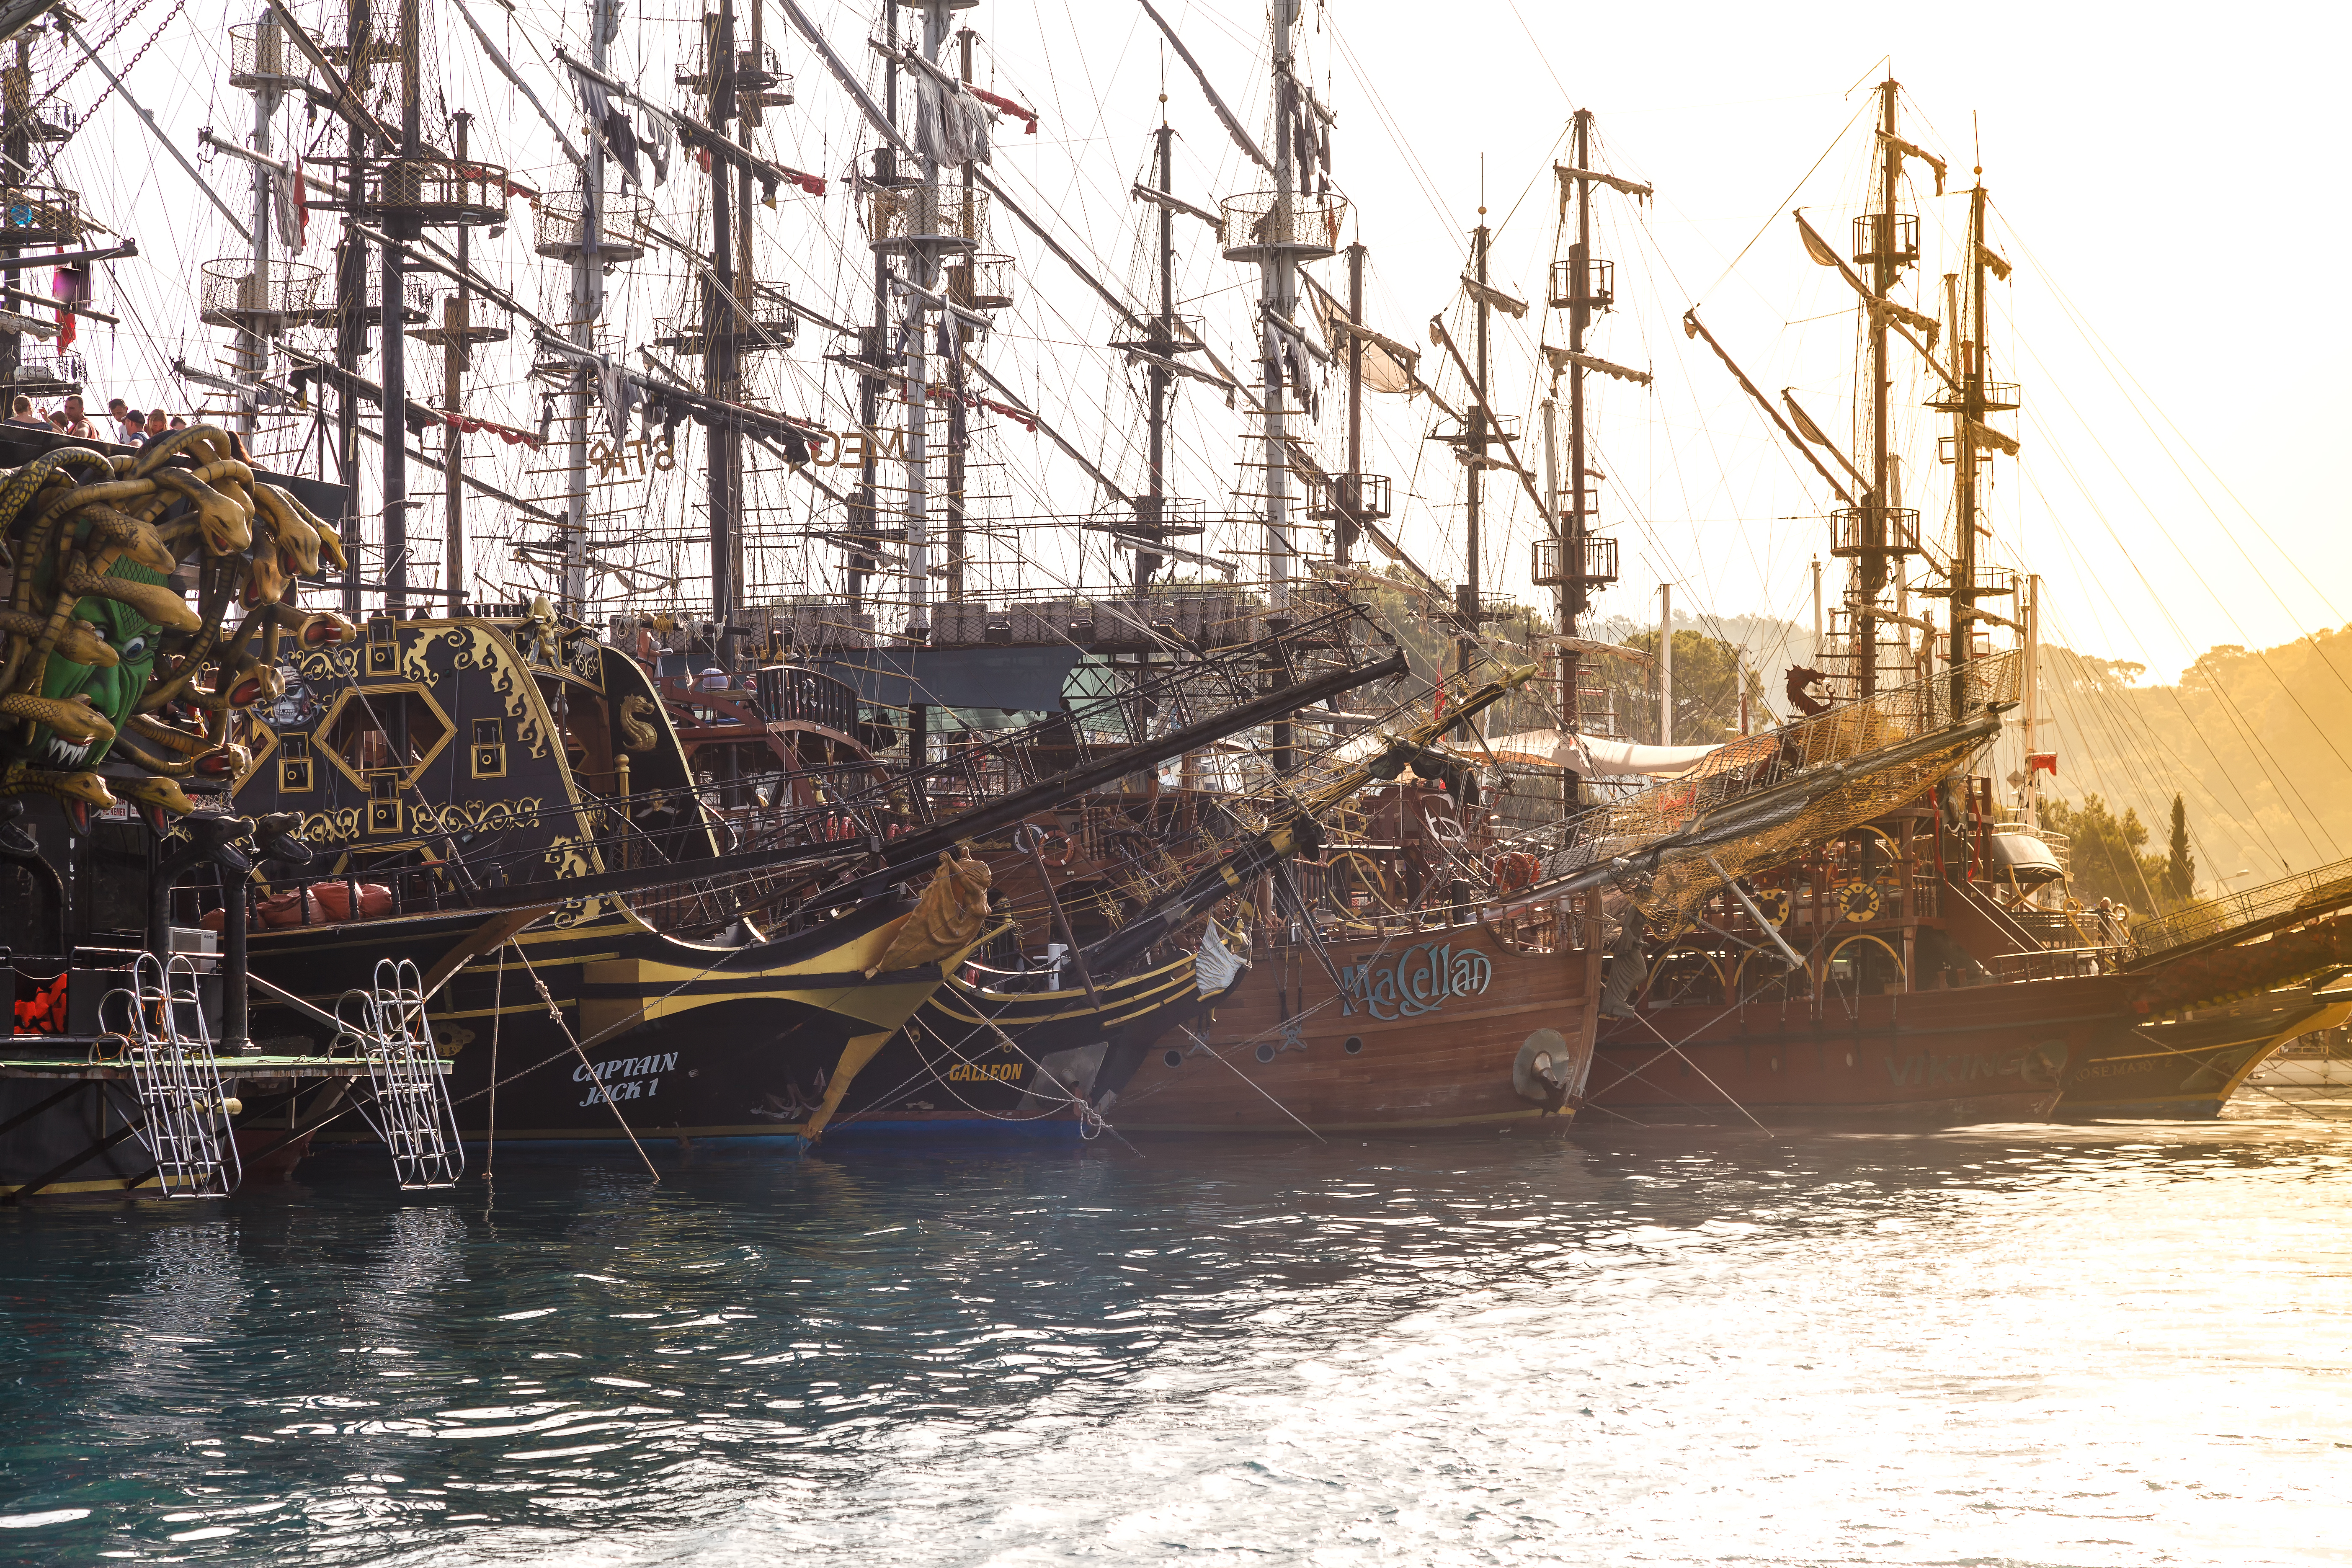 Marina pirate ships